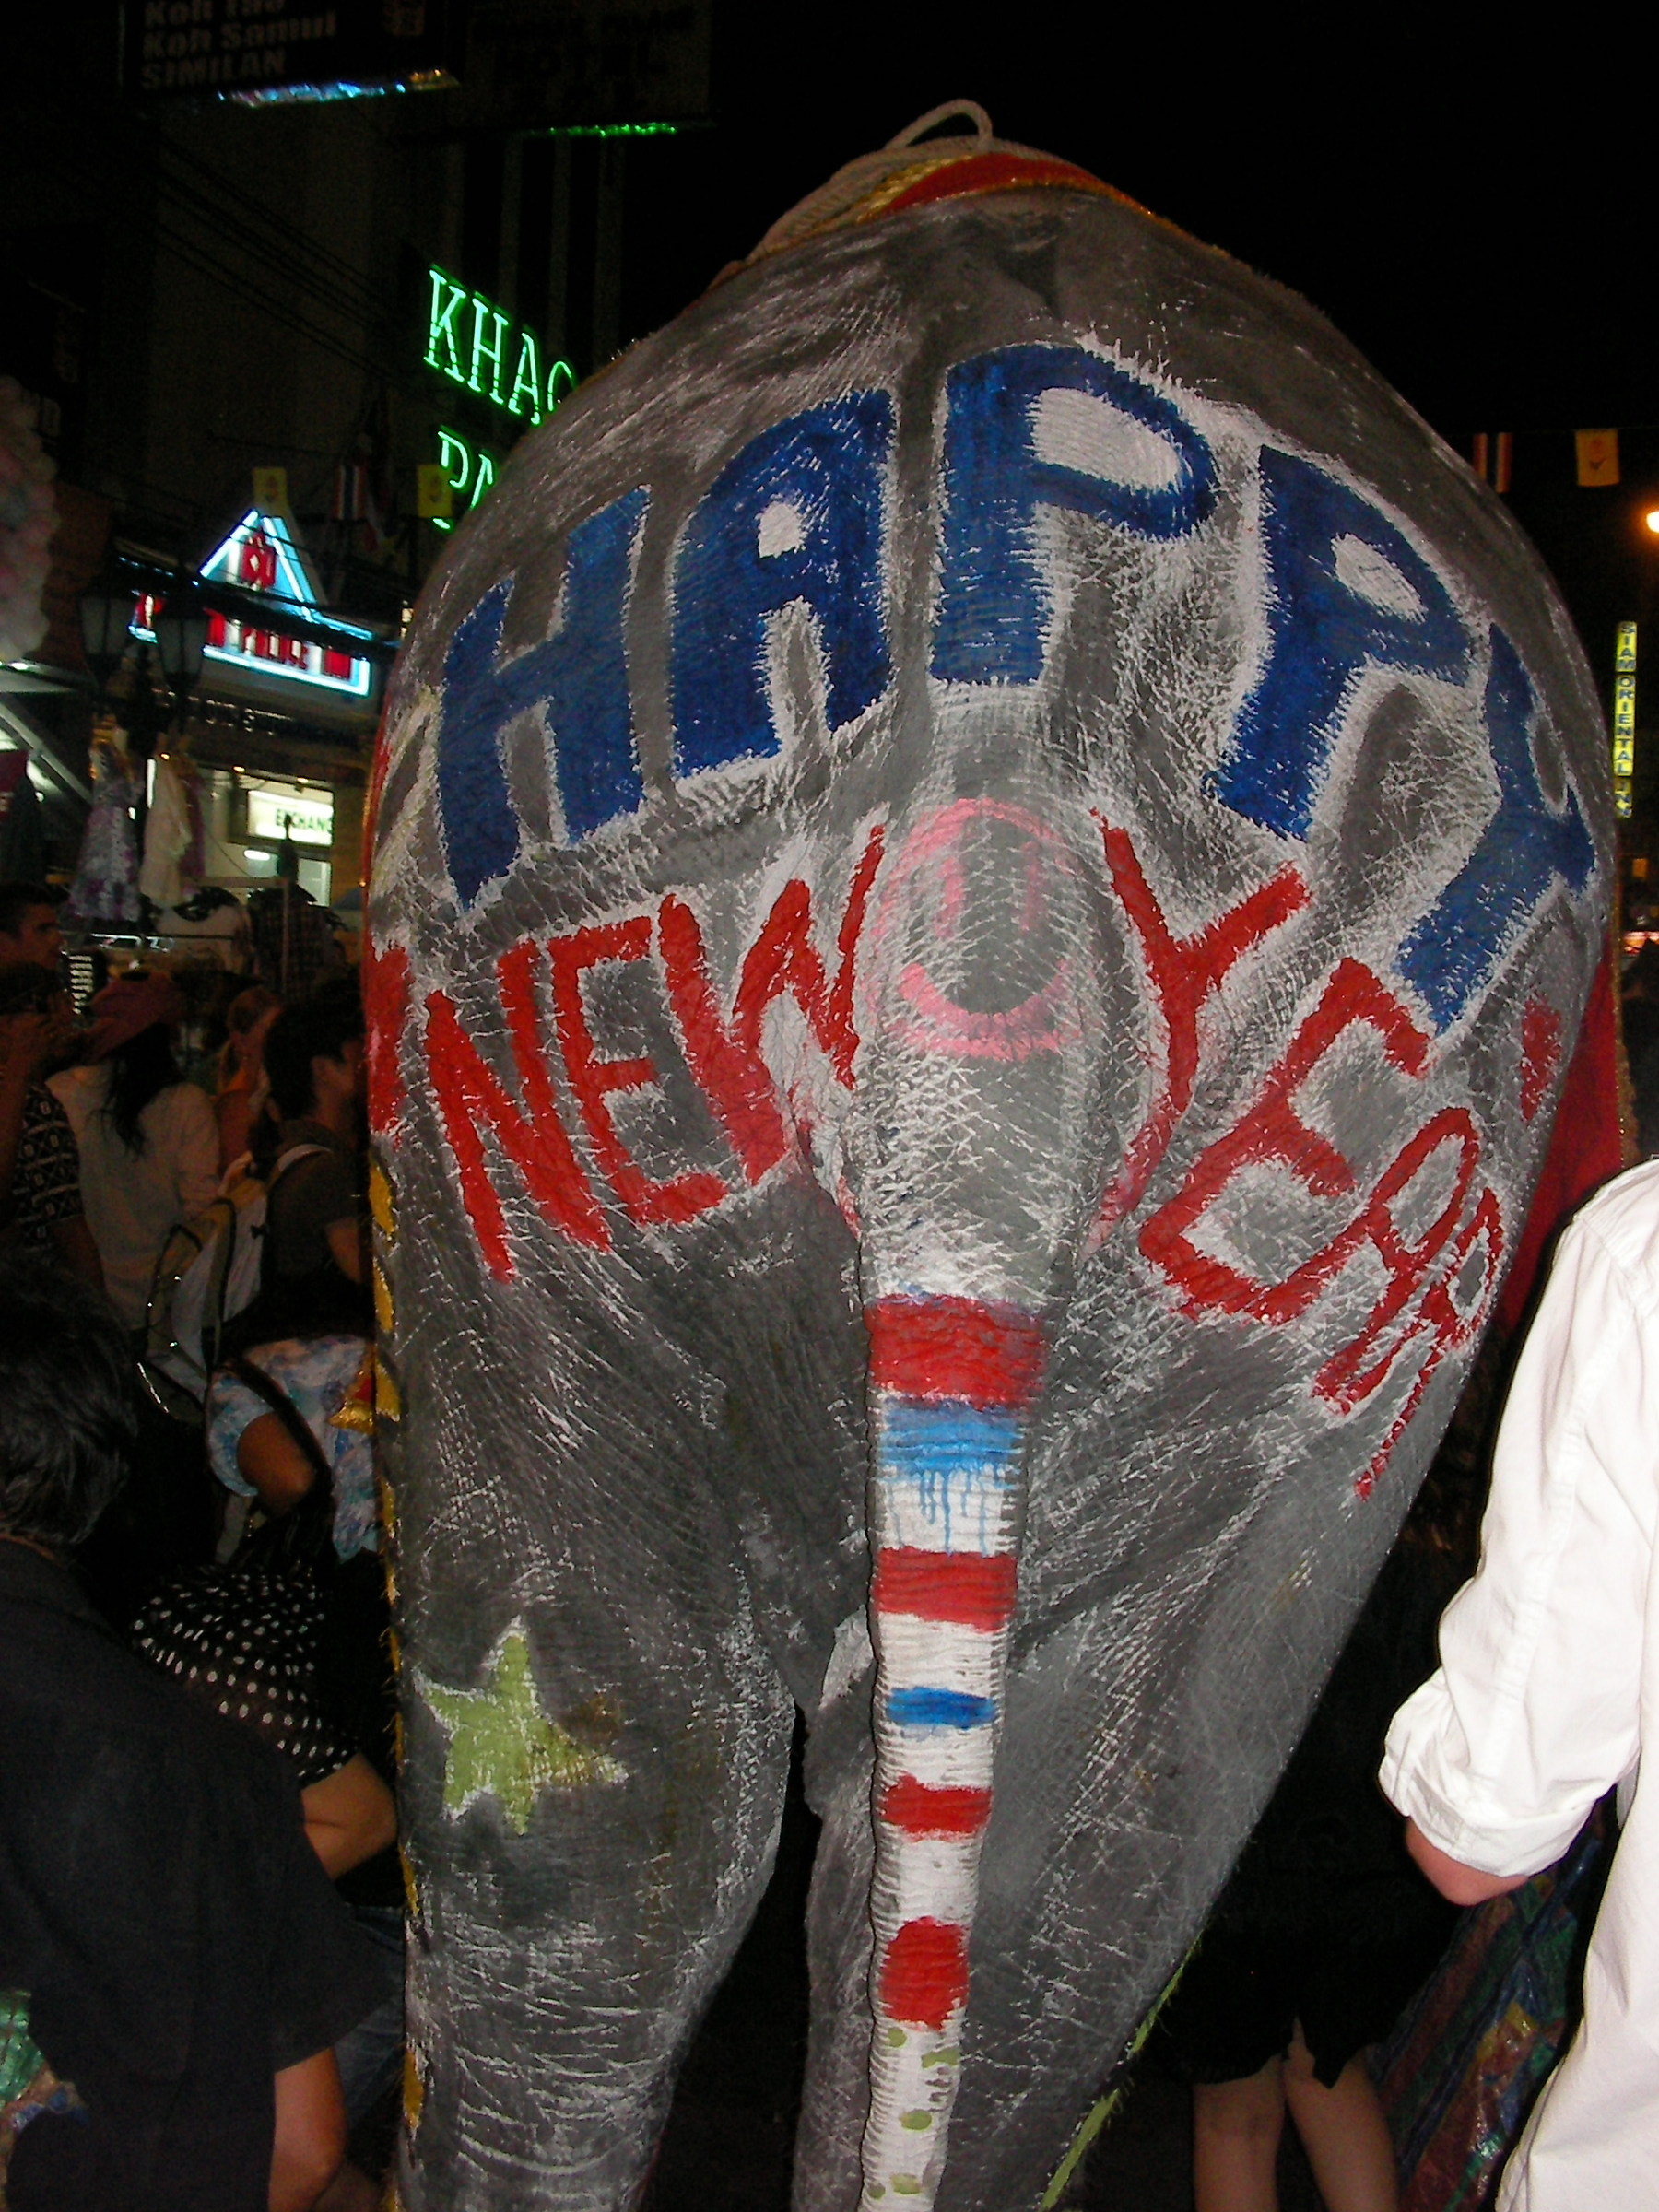 Bangkok - Happy new year 2009...